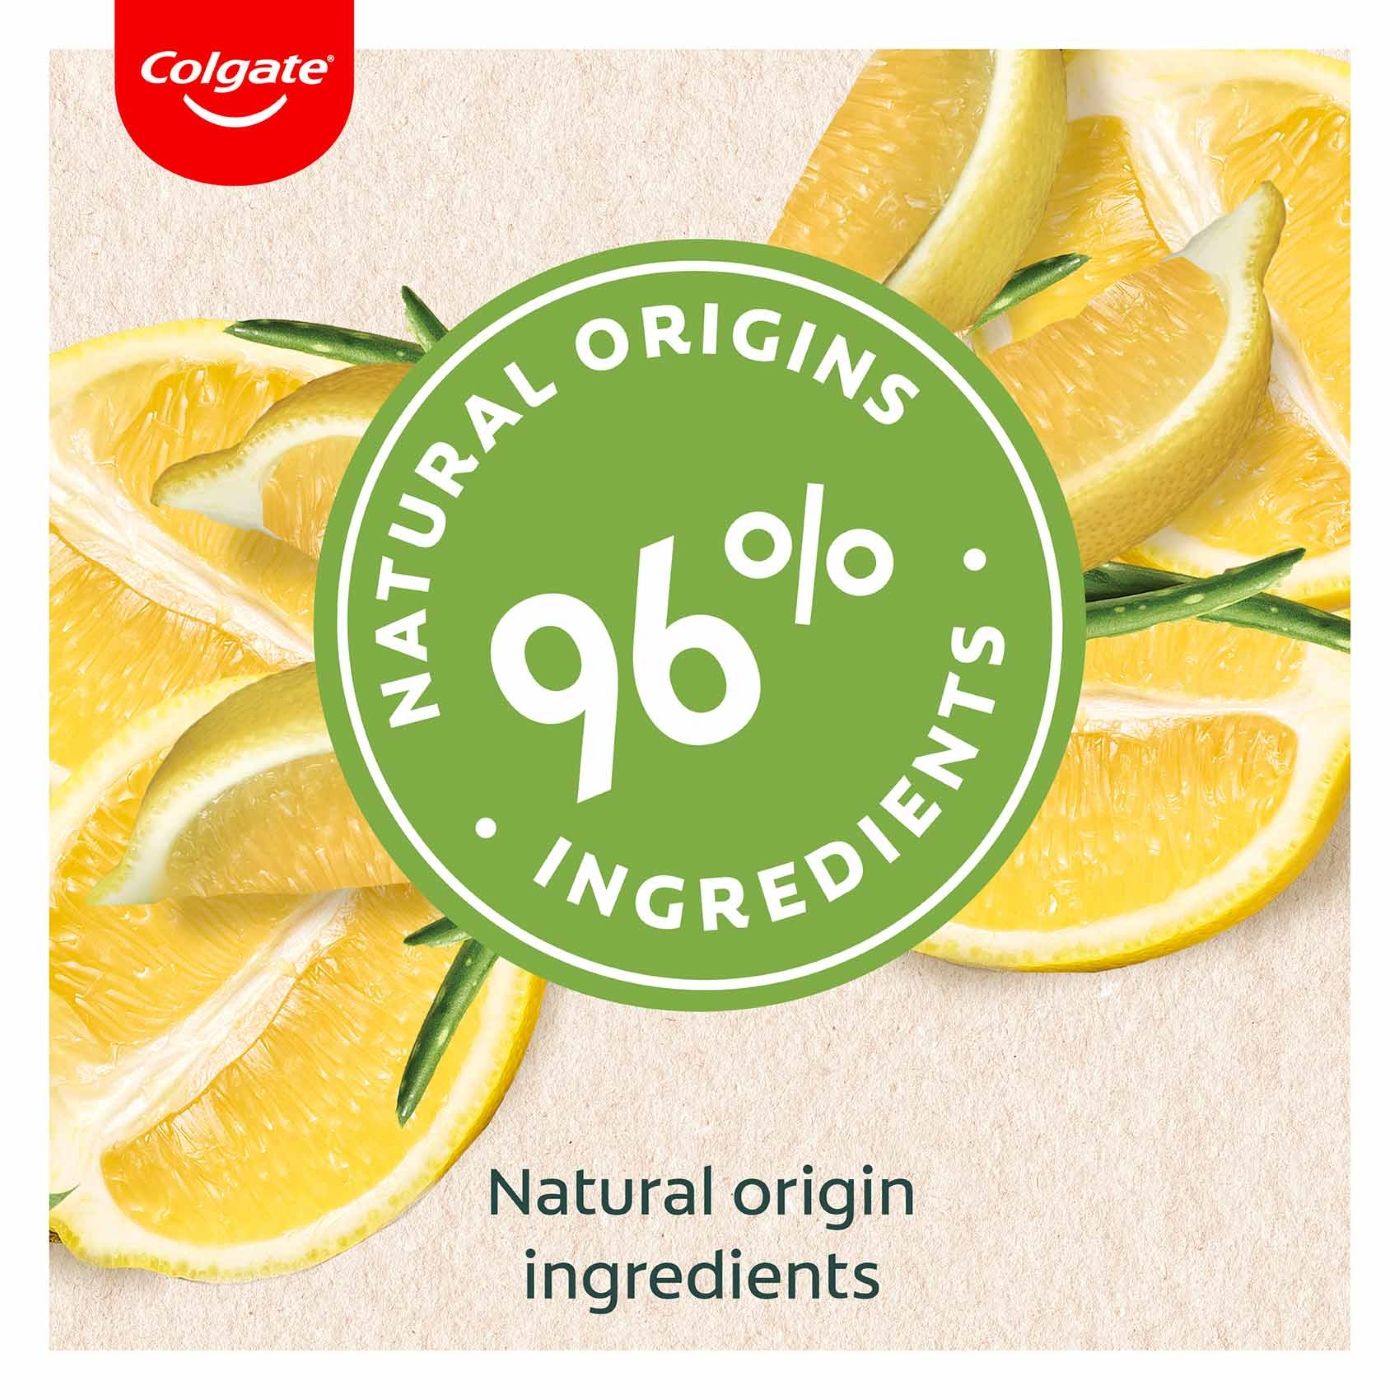 Colgate TP natural lemon 75ml